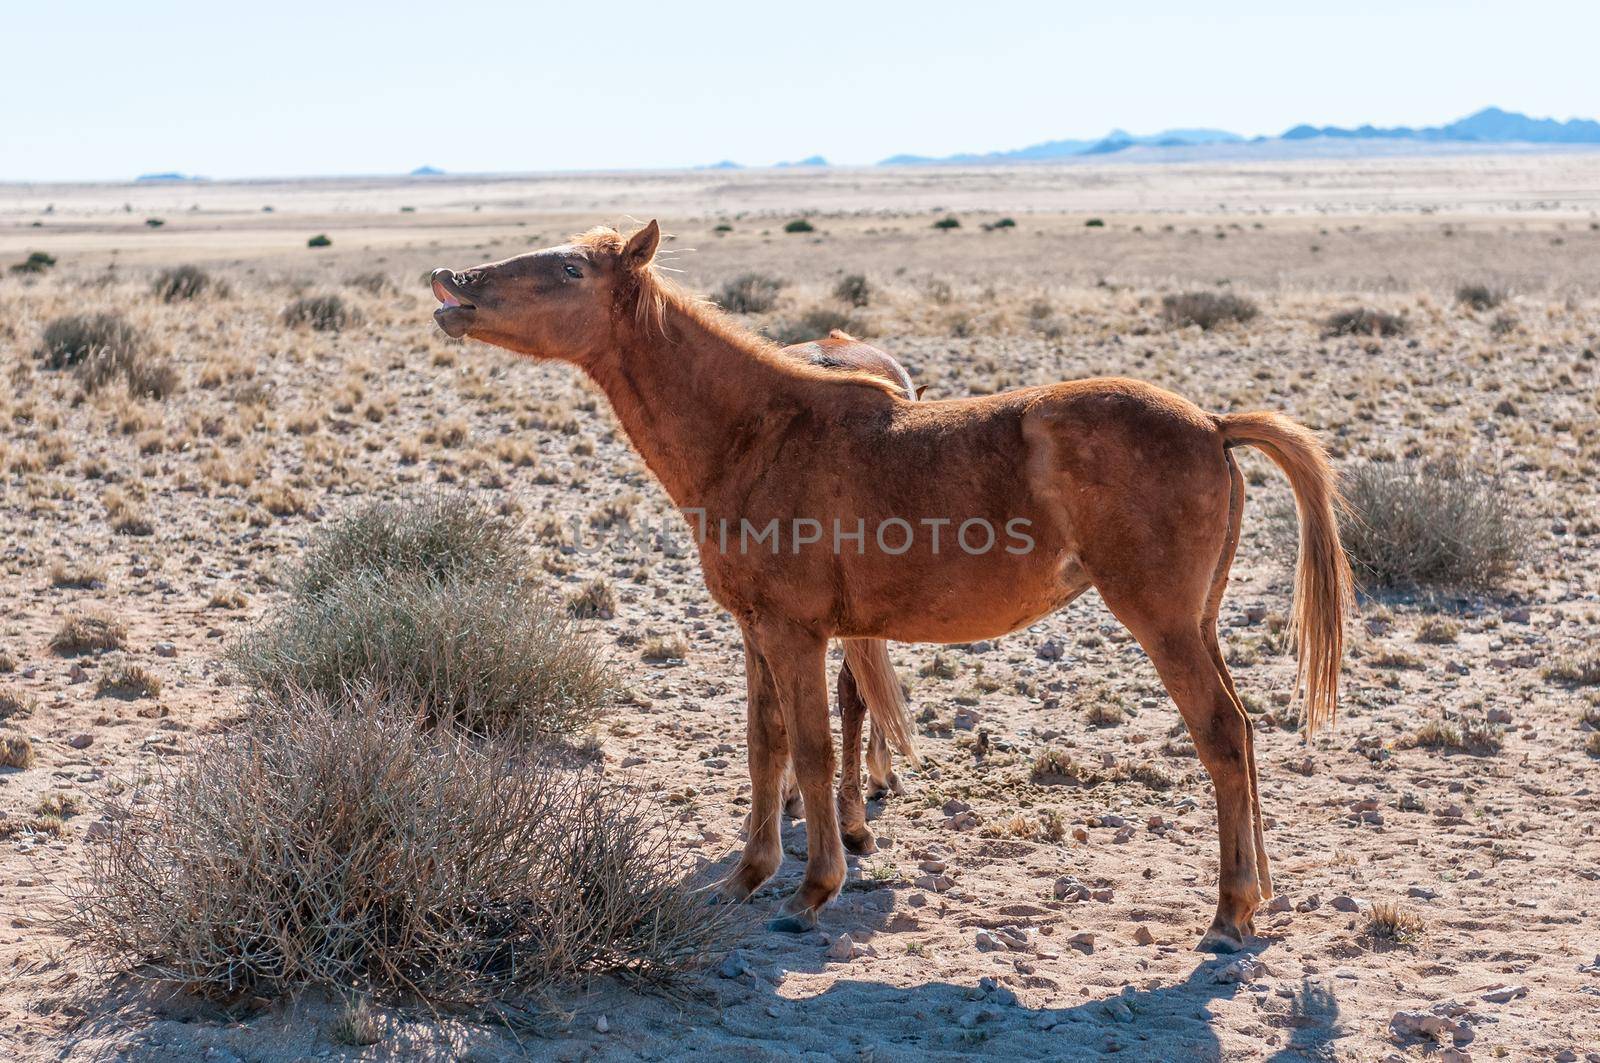 A wild horse of the Namib neighing. Photo taken at Garub